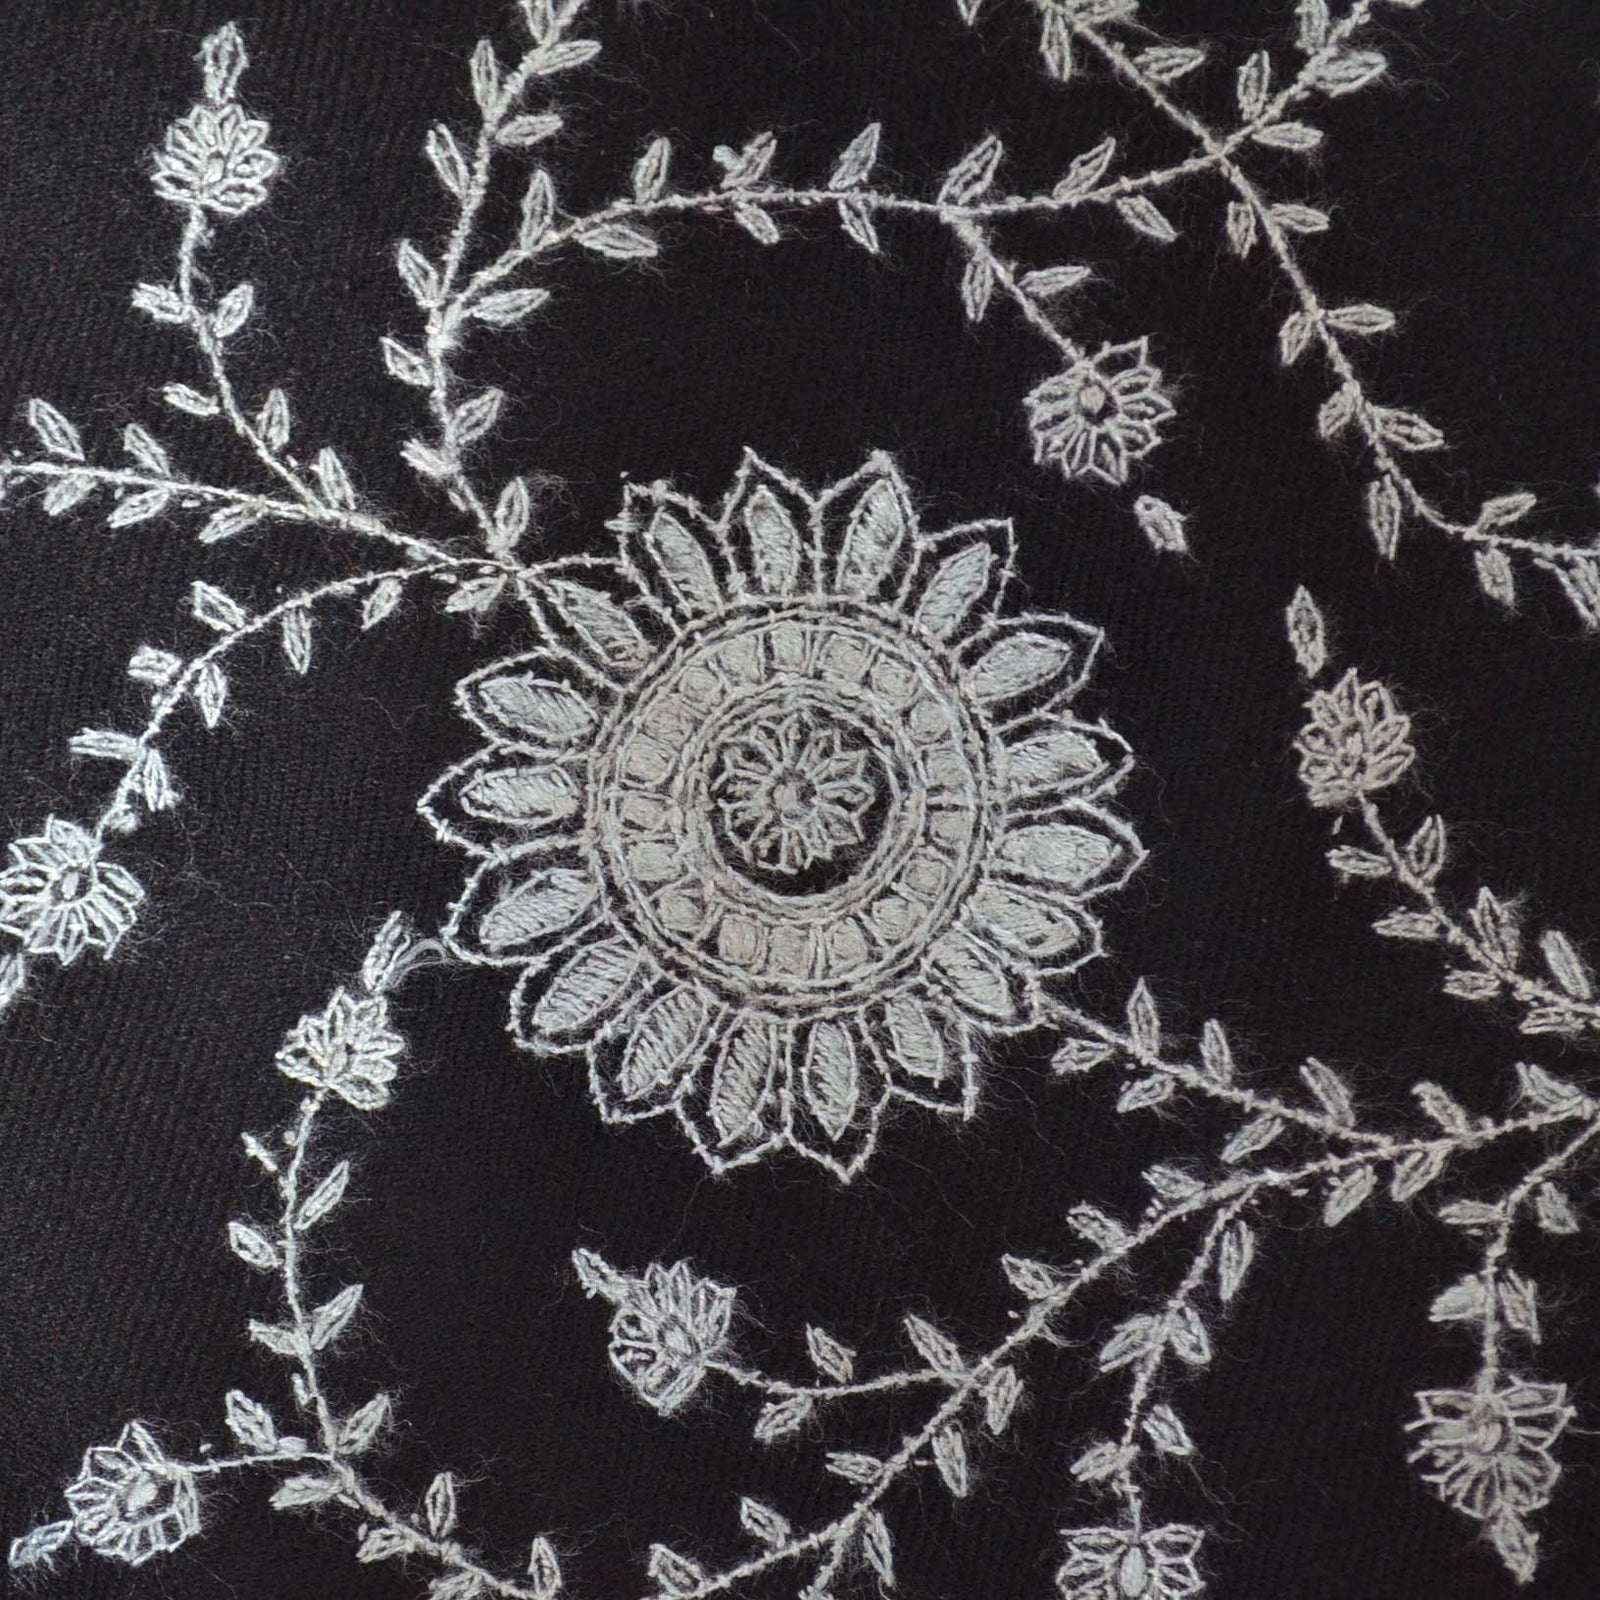 Kashmiri Sozni needle embroidery on a Pashmina shawl